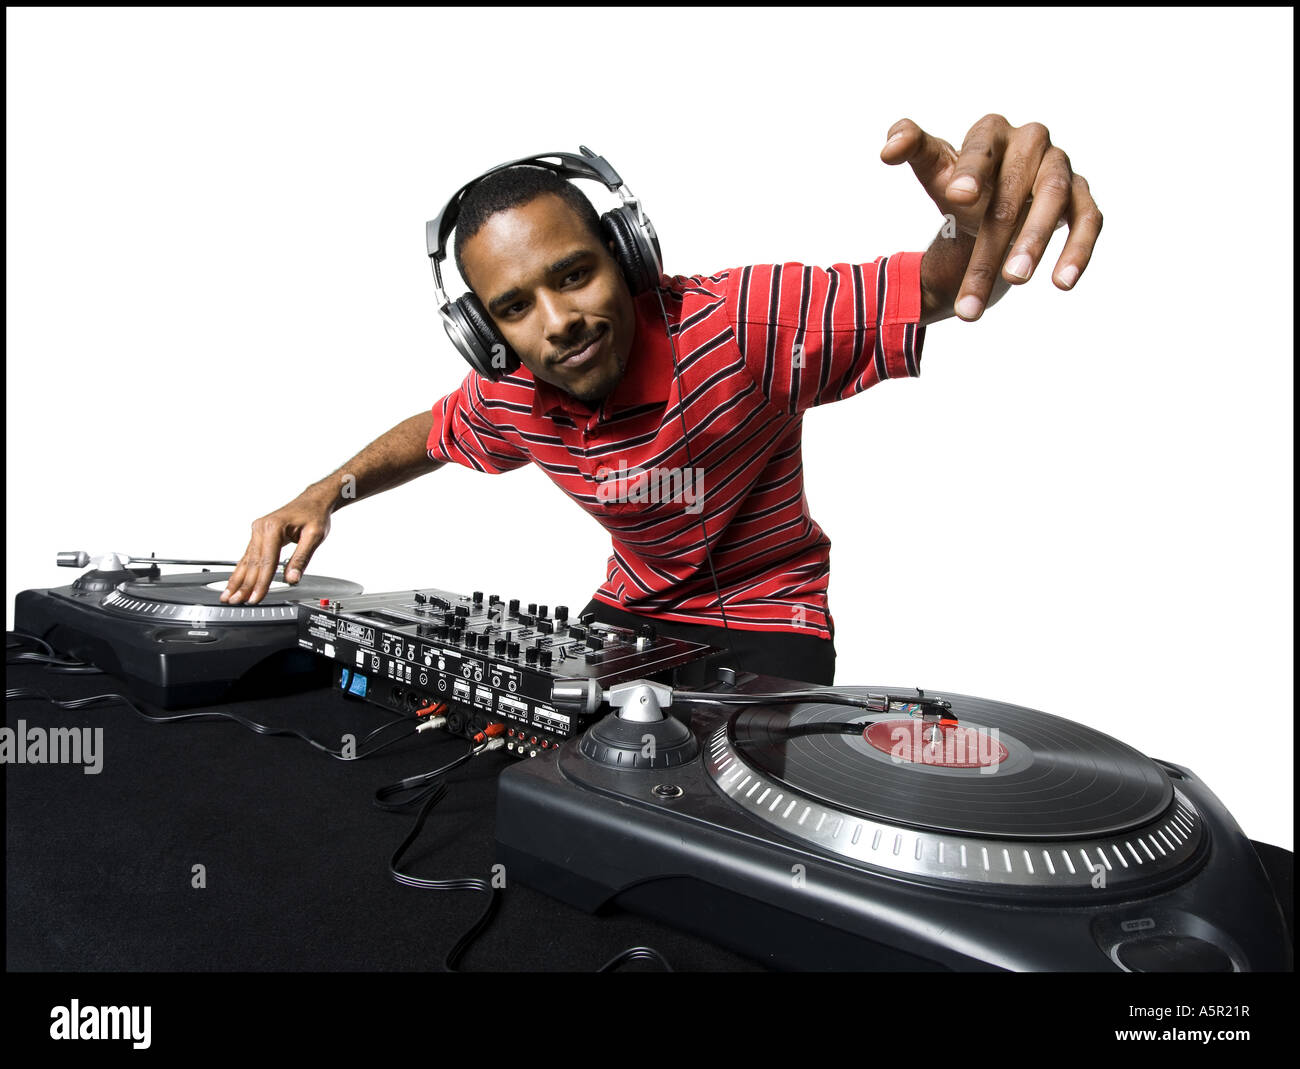 DJ with headphones spinning records Stock Photo - Alamy